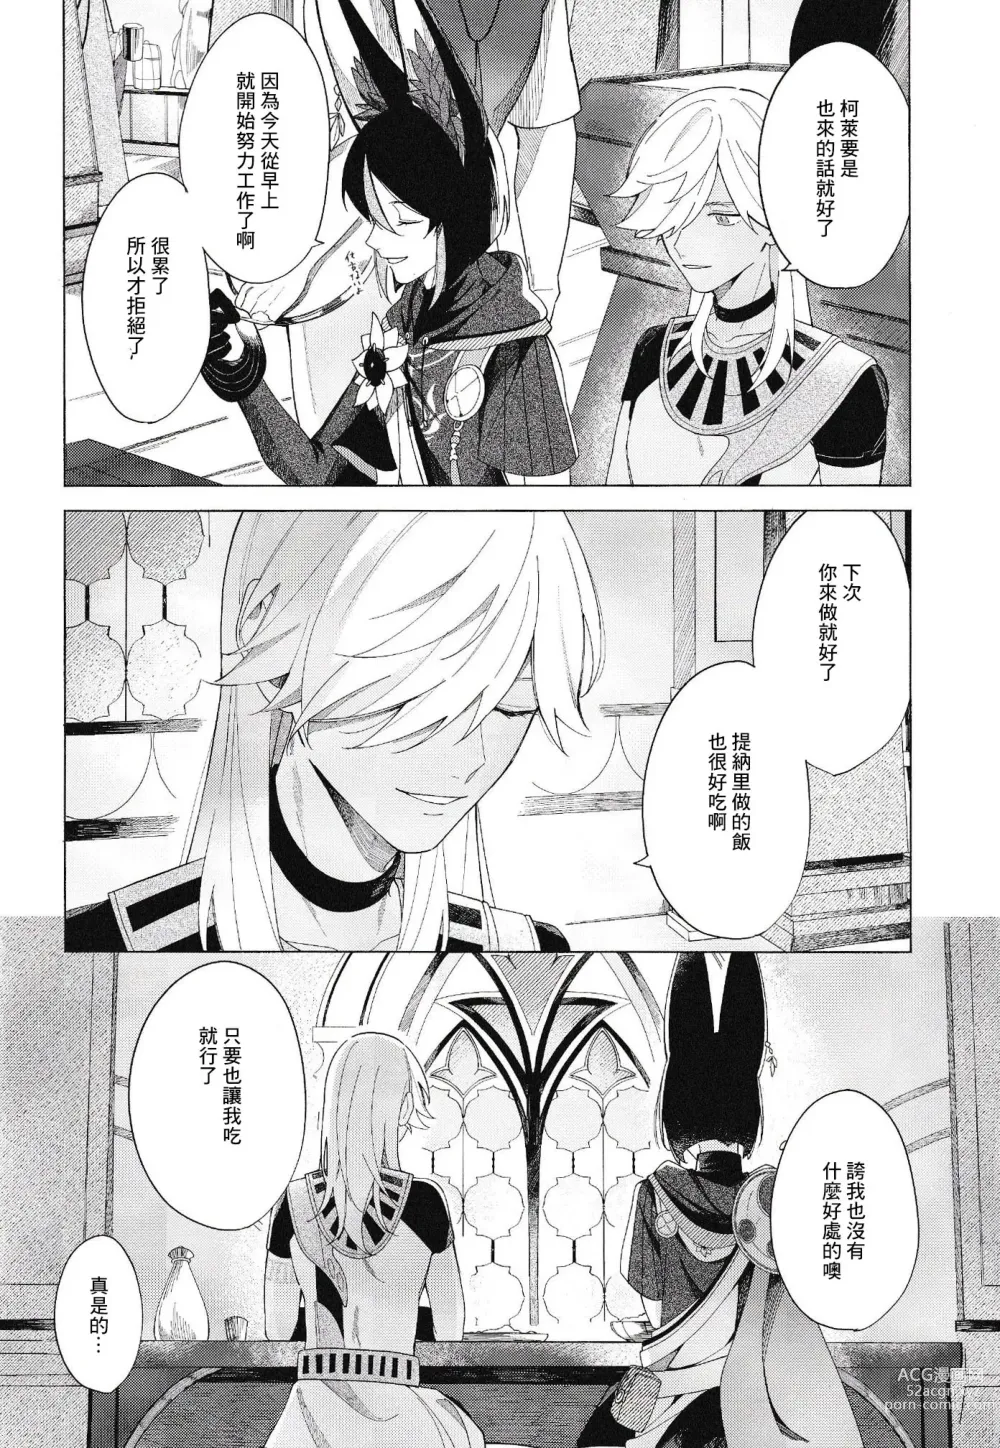 Page 7 of doujinshi 這種咬法沒聽說過啊!